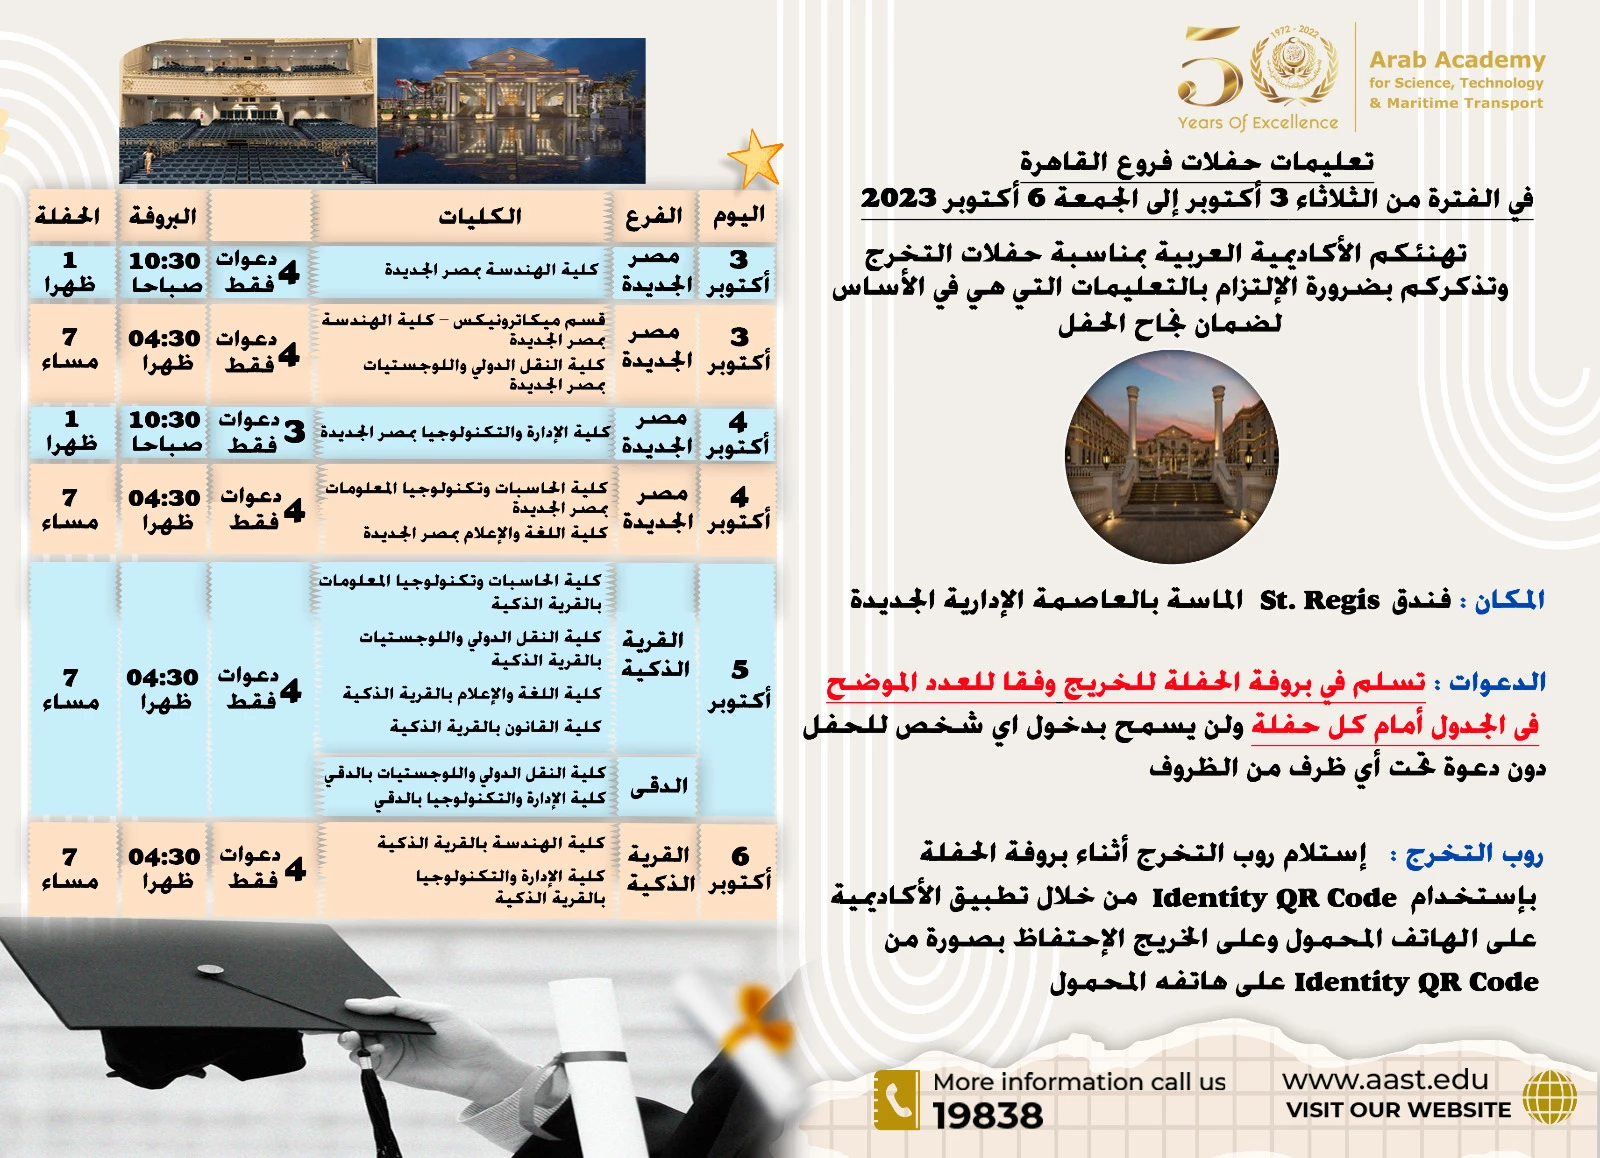 Important Announcement Concerning AASTMT Cairo Campuses Graduation Ceremonies4